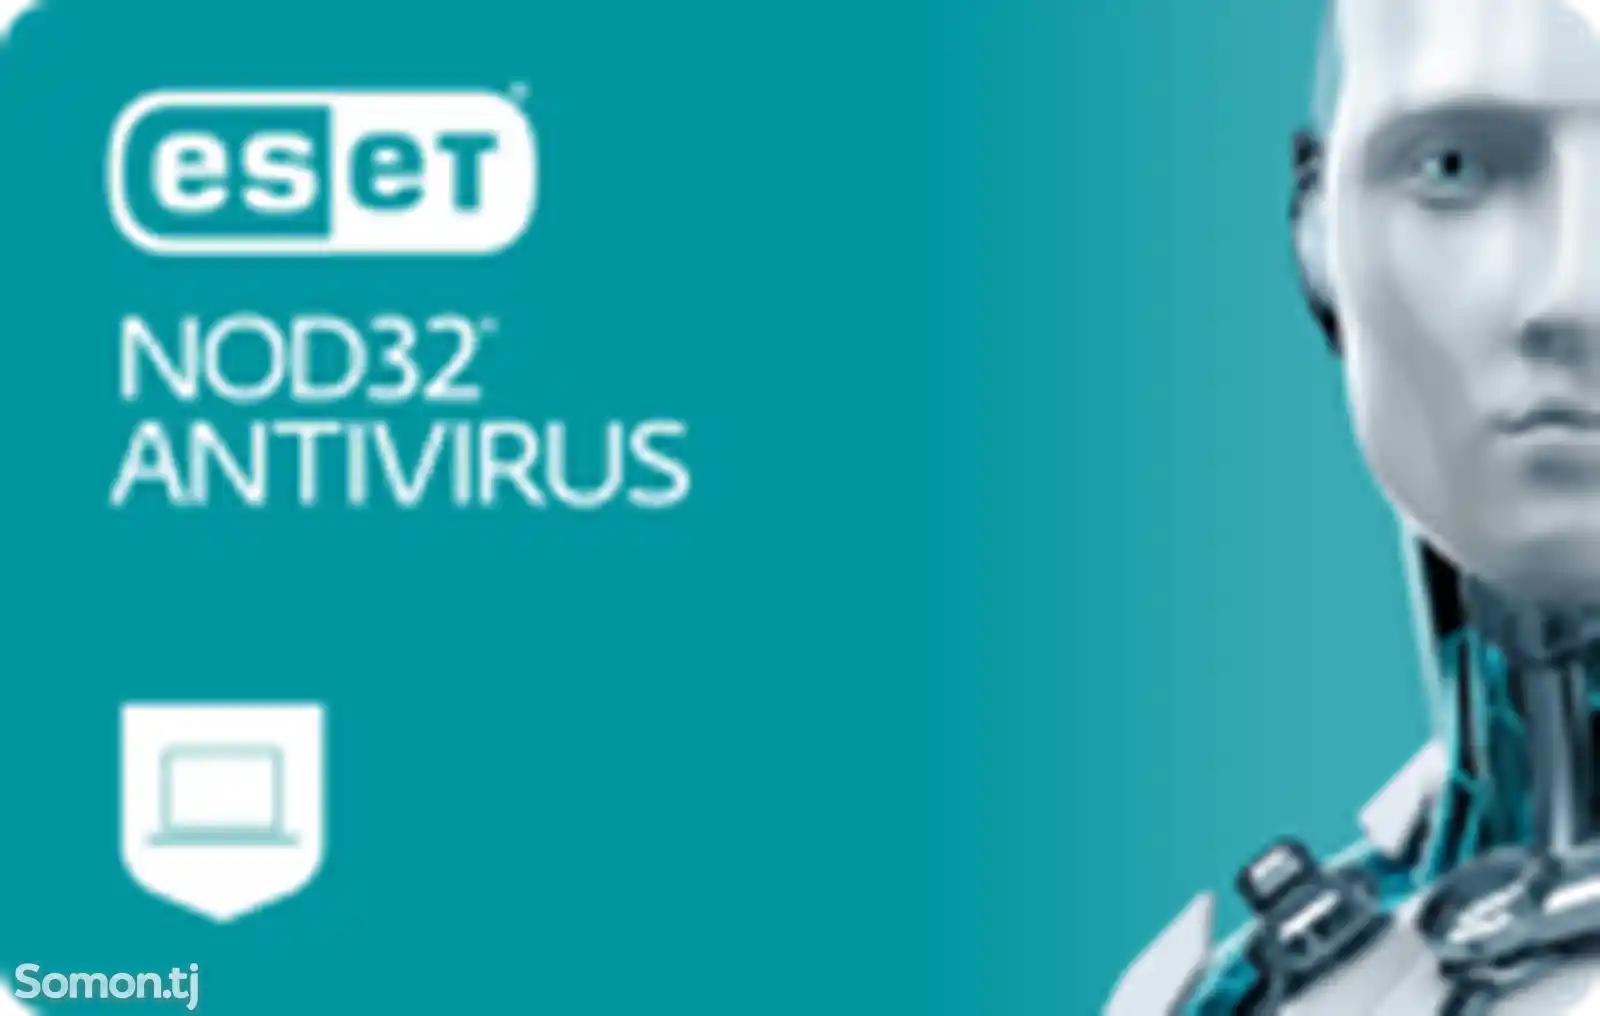 ESET NOD32 Antivirus - иҷозатнома барои 5 роёна, 1 сол-1